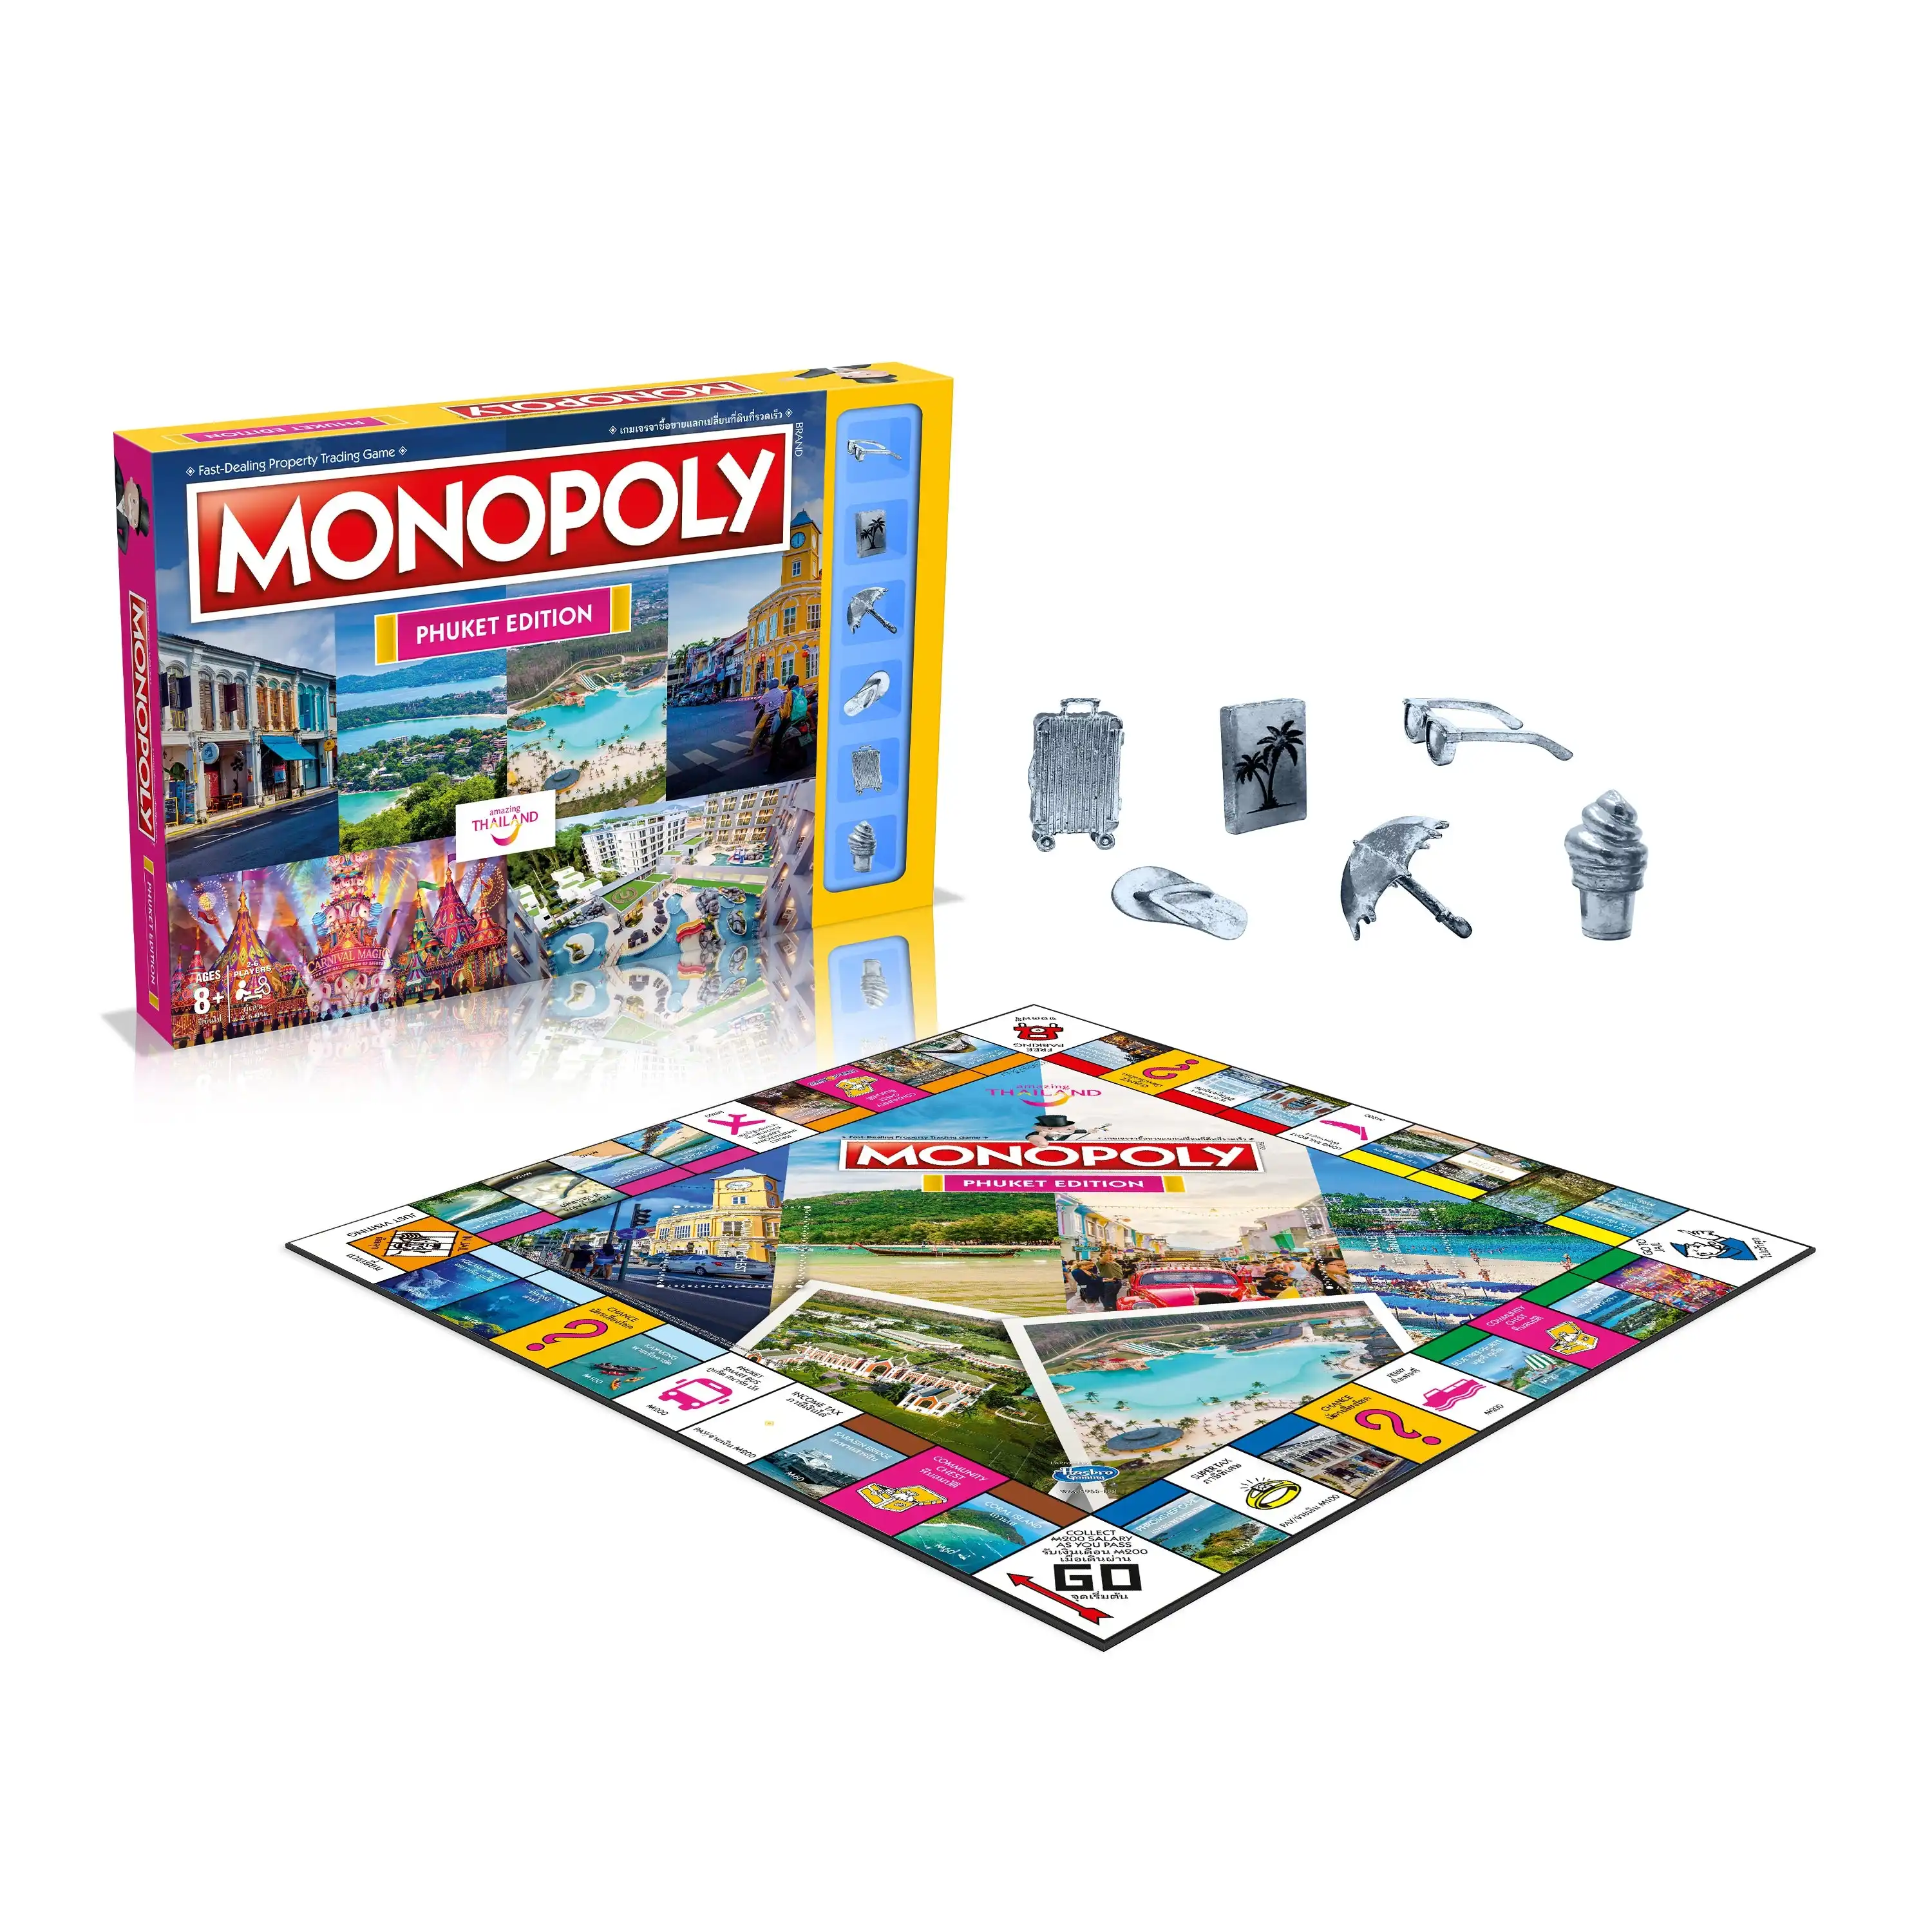 Monopoly, Phuket